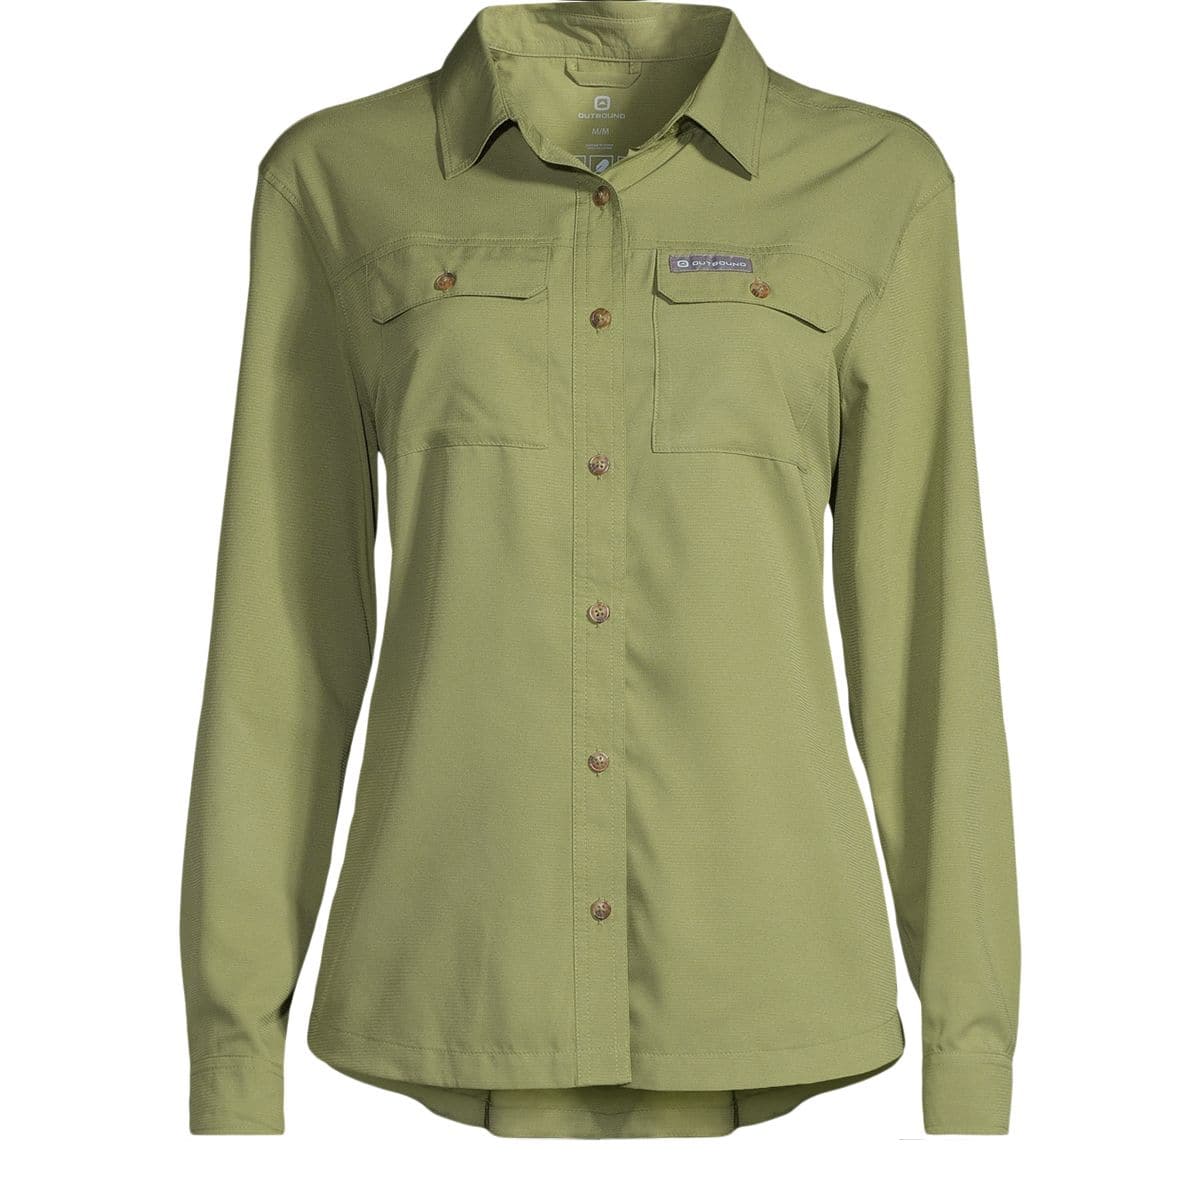 Maurices Premium Womens Burnout Shirt Sz Small Long Sleeve, Nylon